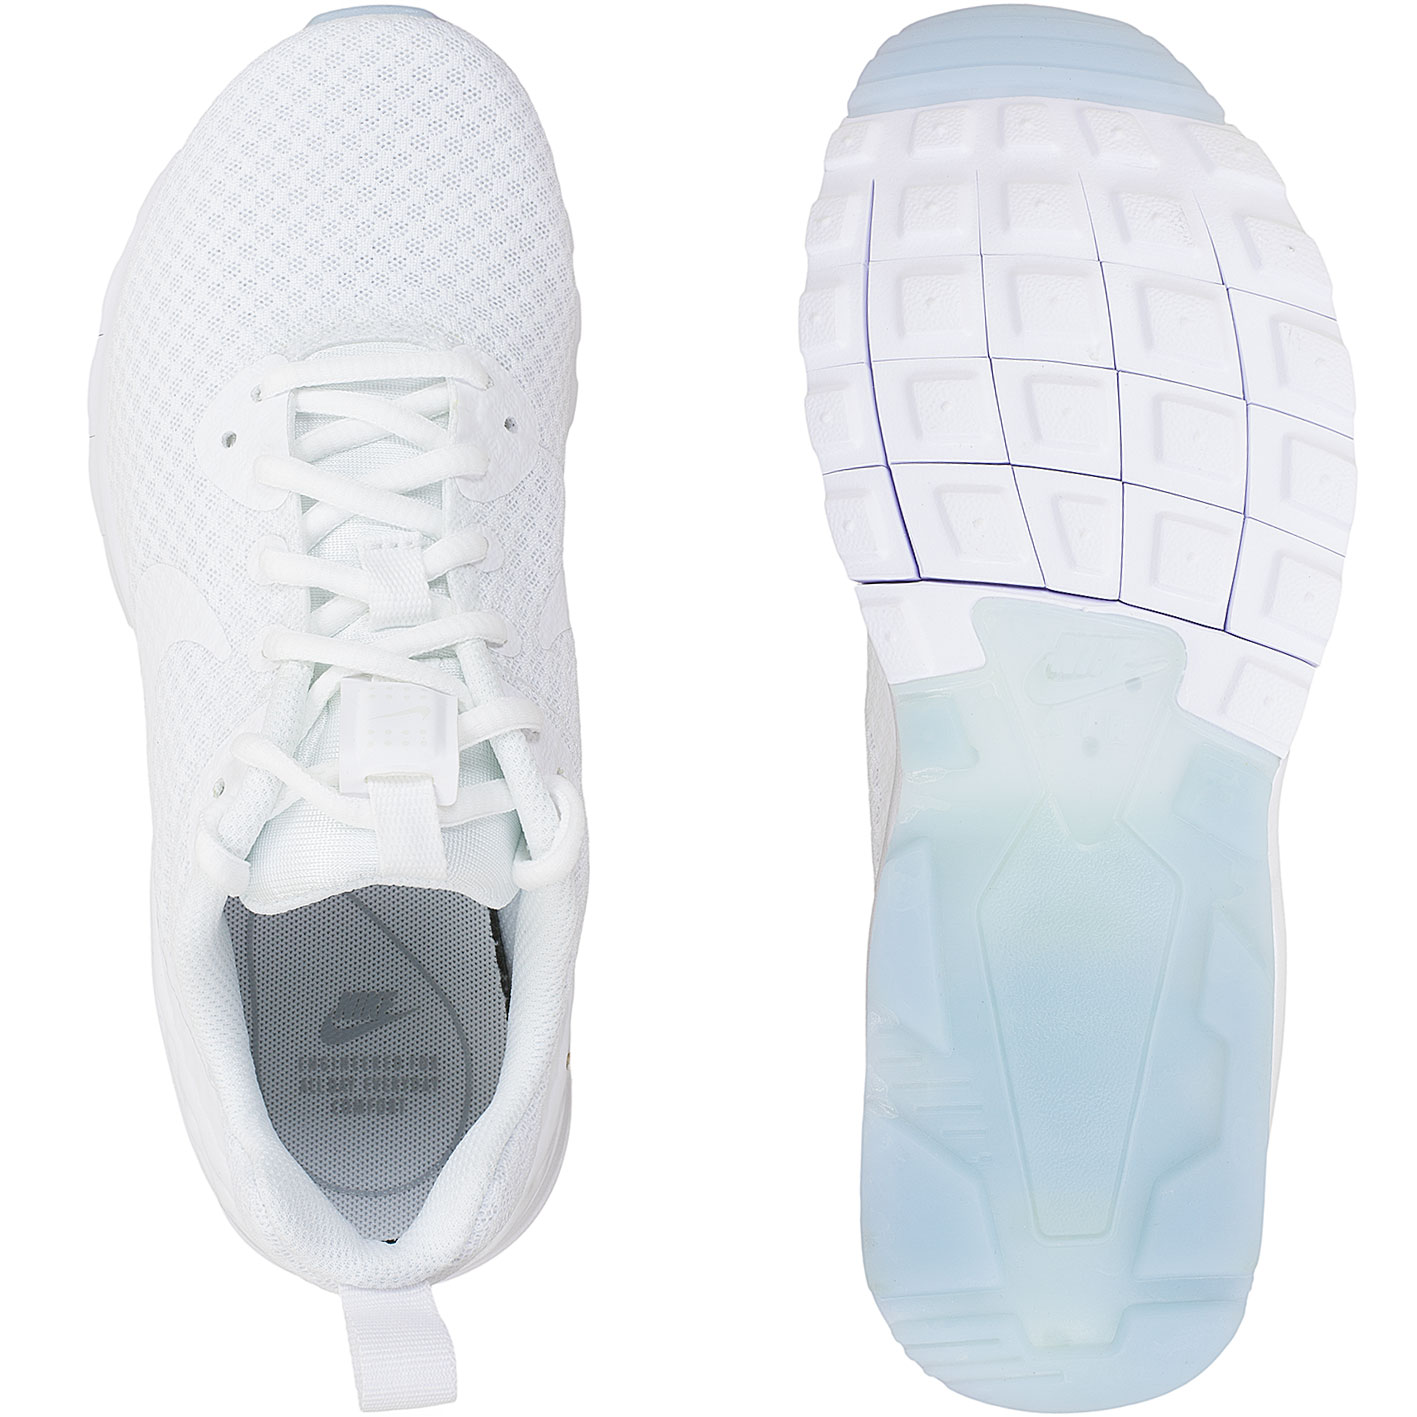 ☆ Nike Damen Sneaker Air Max Motion LW weiß/weiß - hier bestellen!